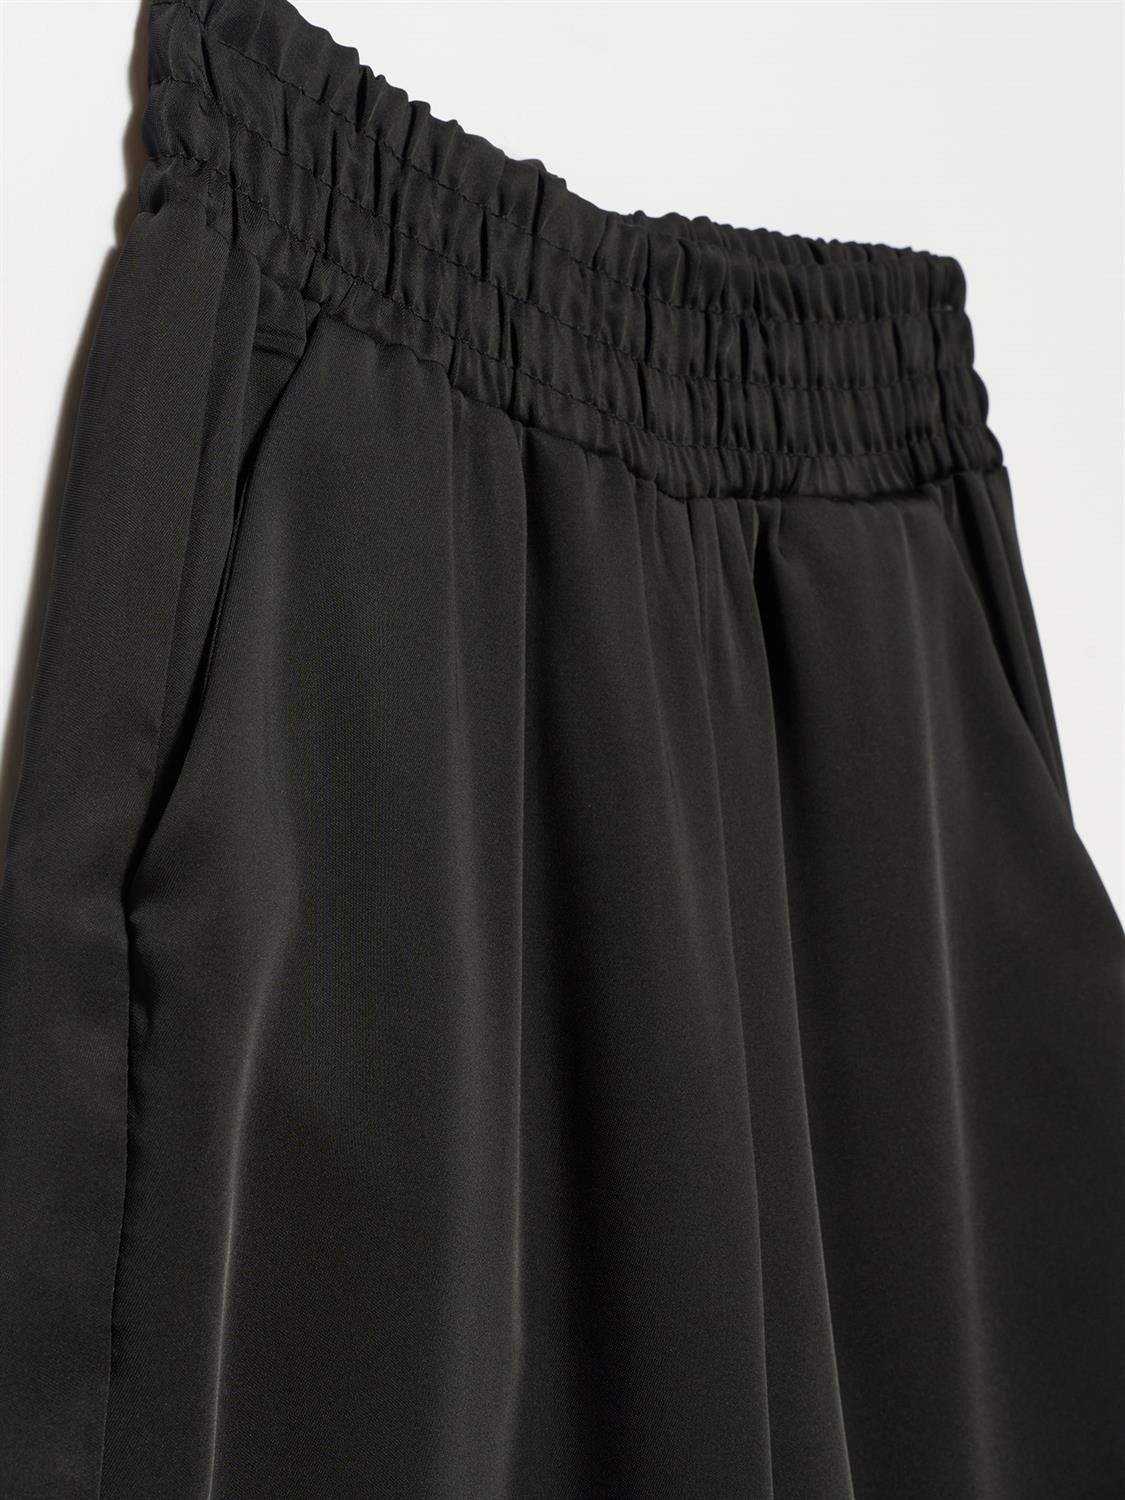 70551 Beli Lastikli Geniş Pantolon-Siyah